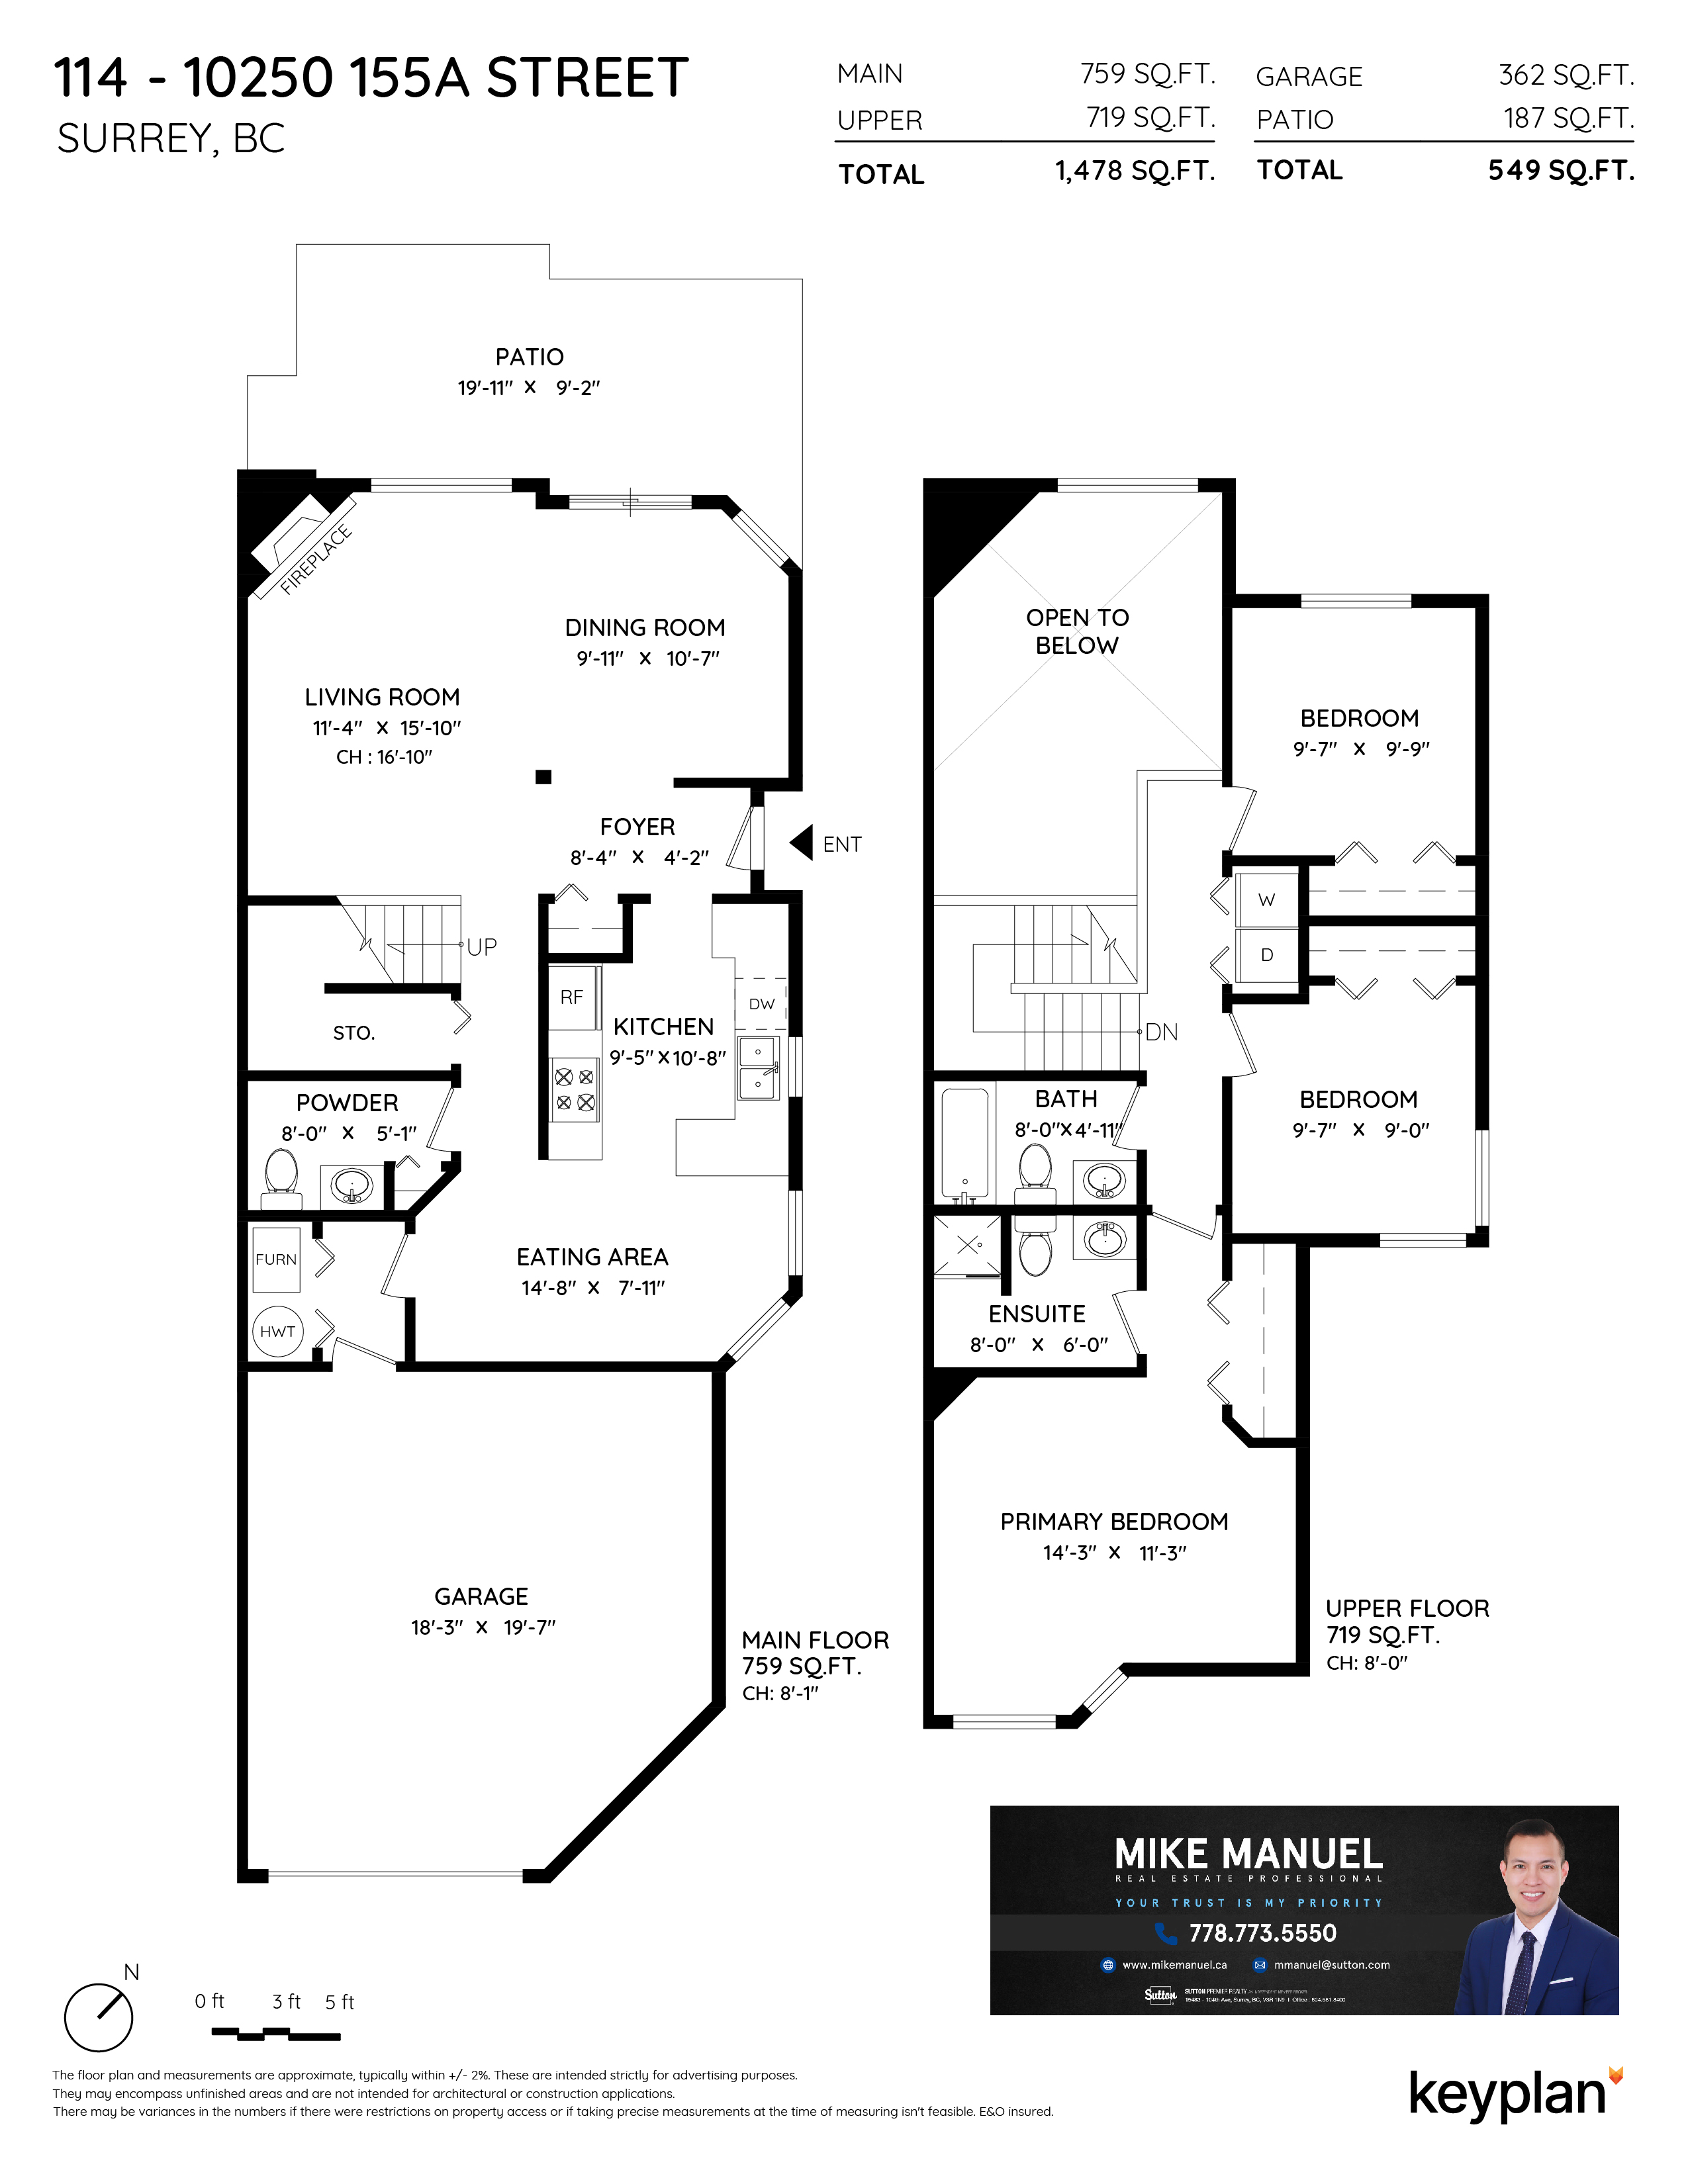 Mike Manuel - Unit 114 - 10250 155A Street, Surrey, BC, Canada | Floor Plan 1